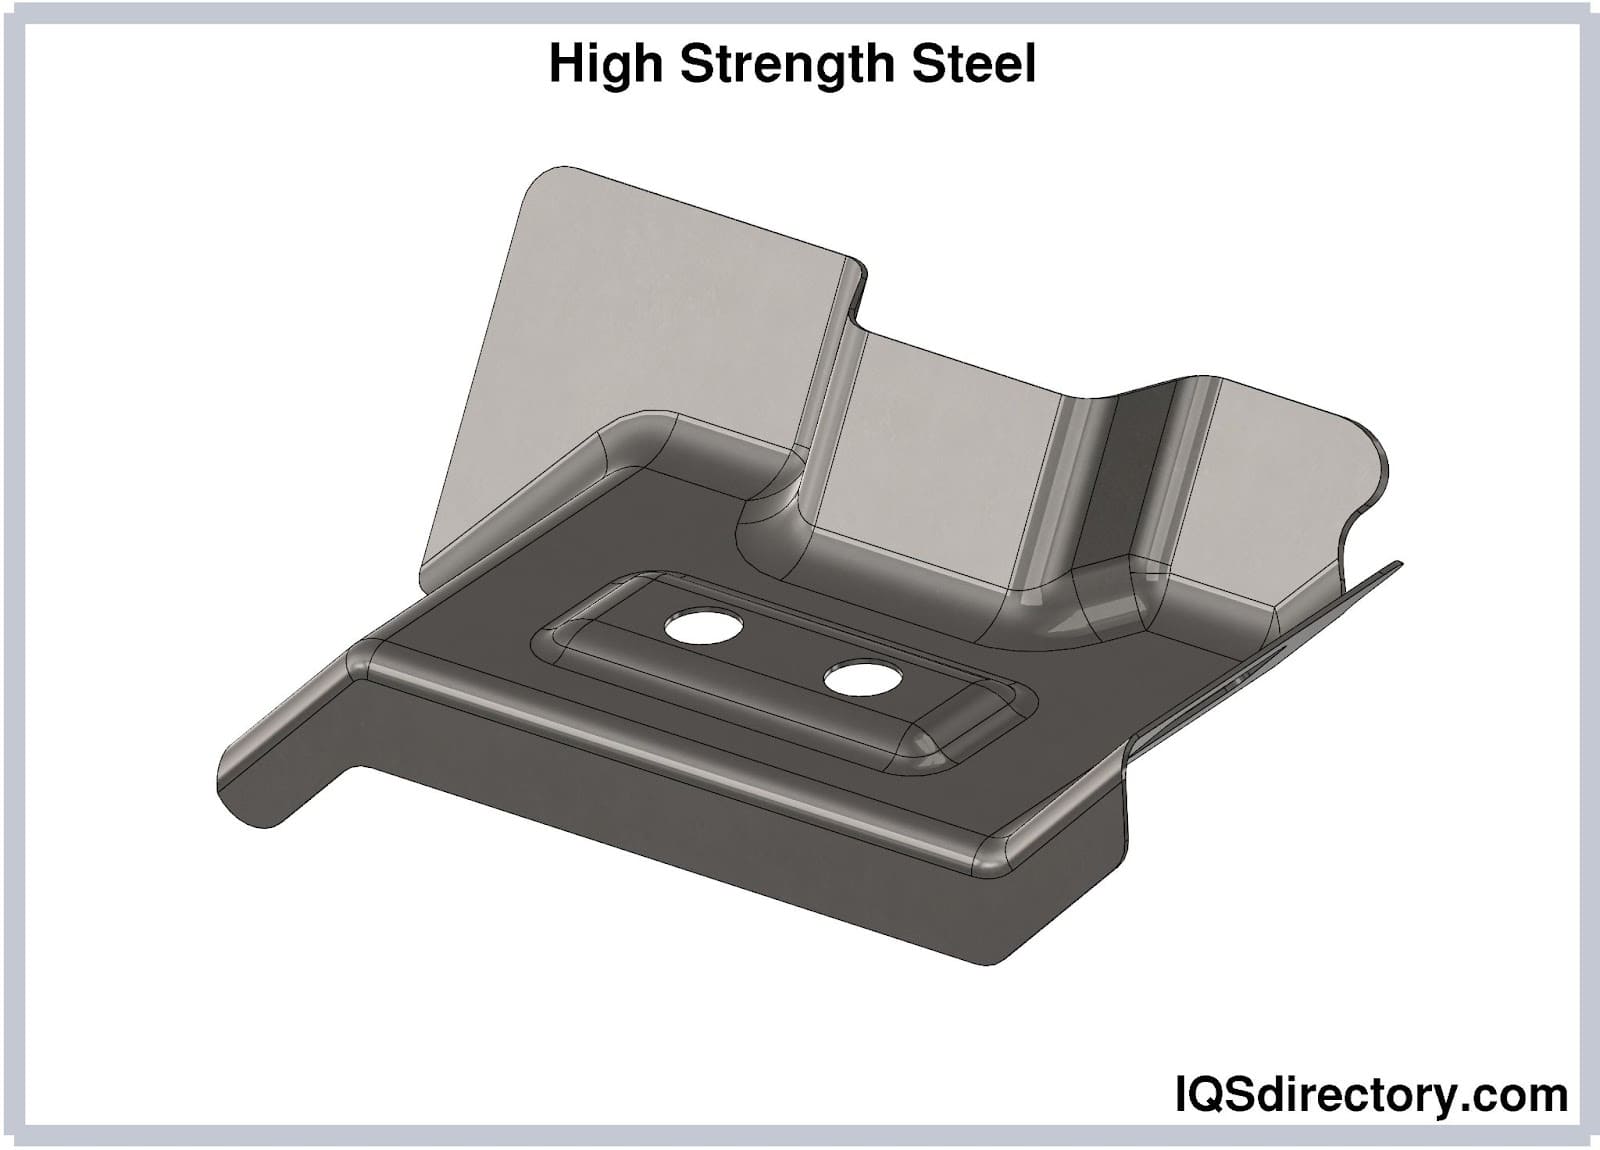 High Strength Steel